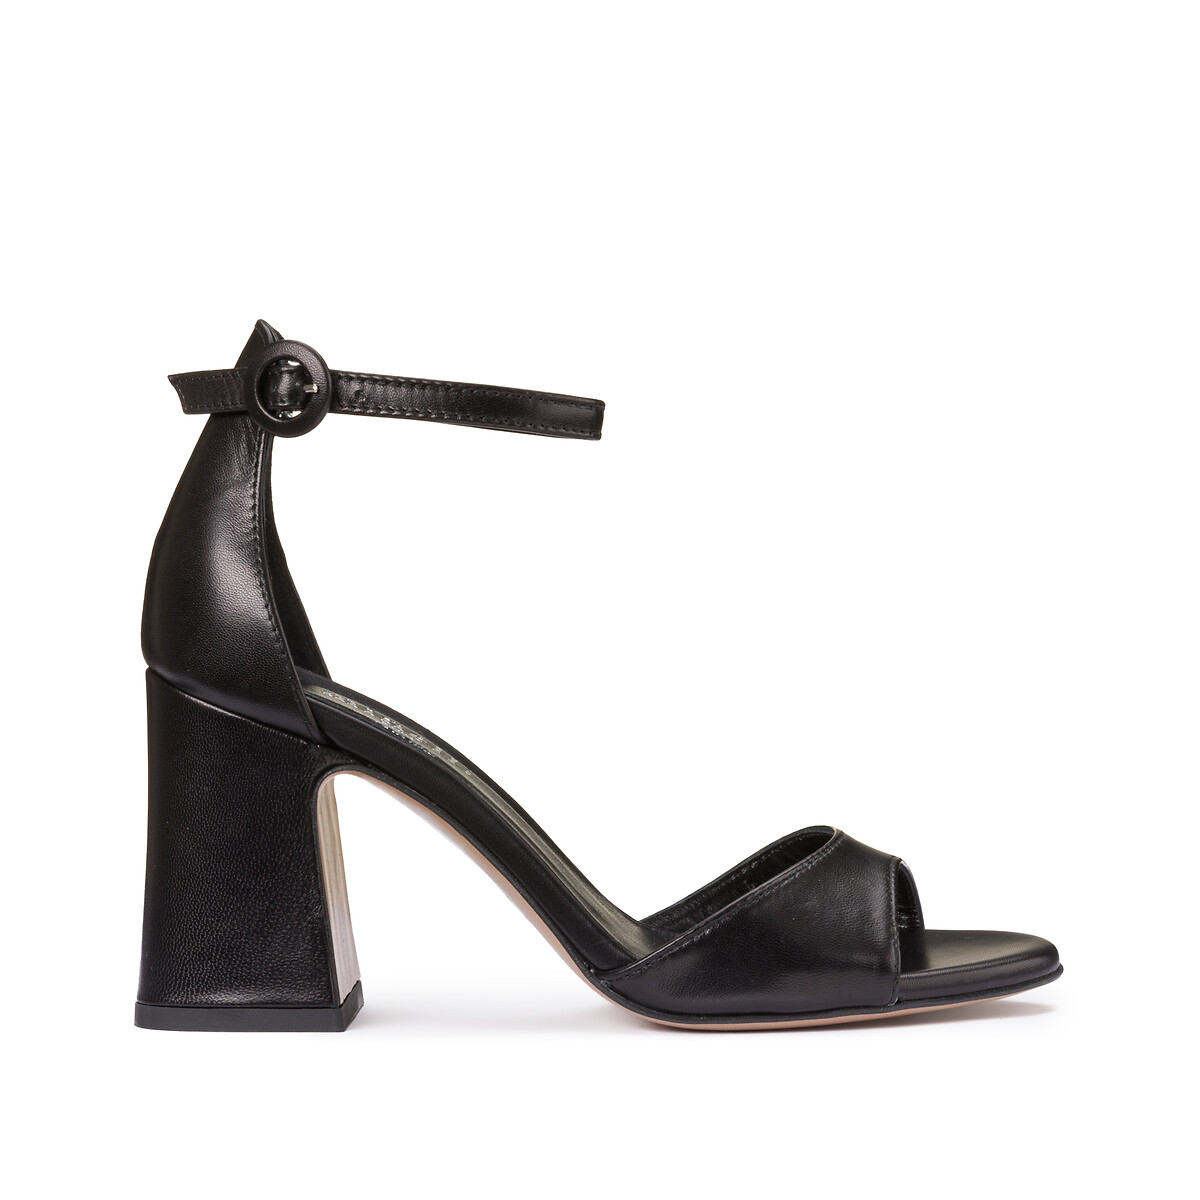 Leather block heel sandals, black, Minelli | La Redoute